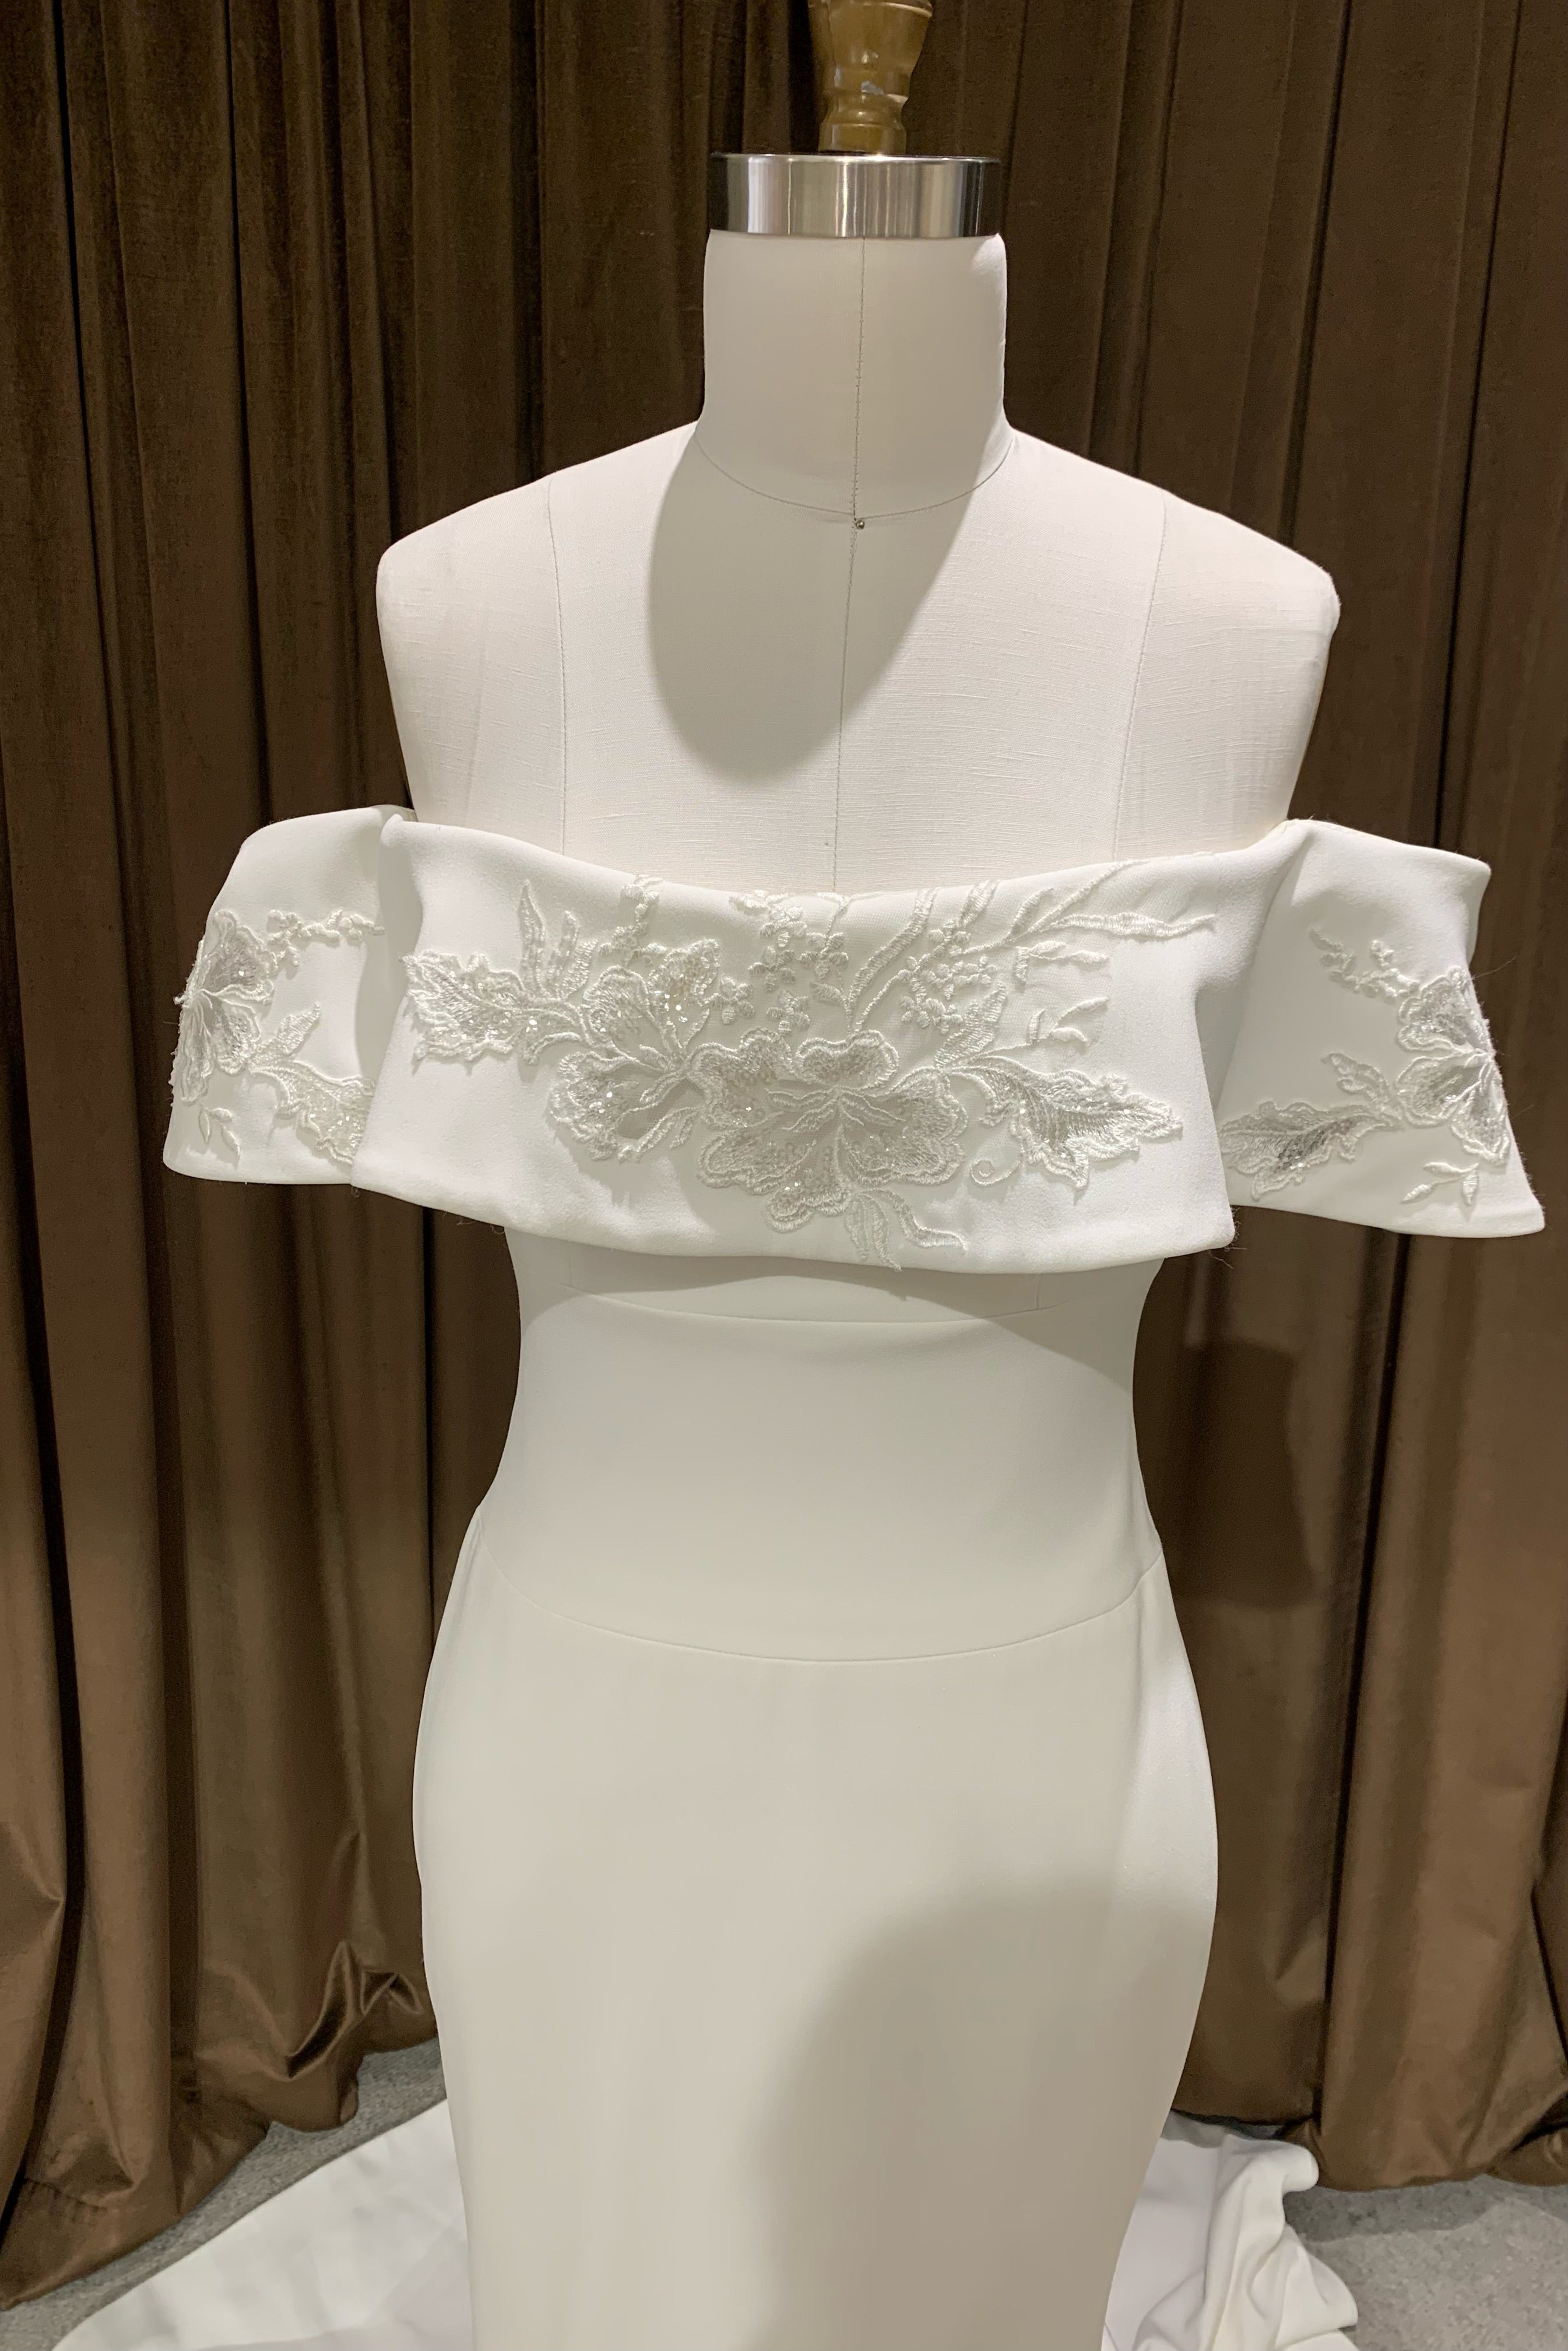 GC#32090 - Ines Di Santo Daire Wedding Dress in Size 10